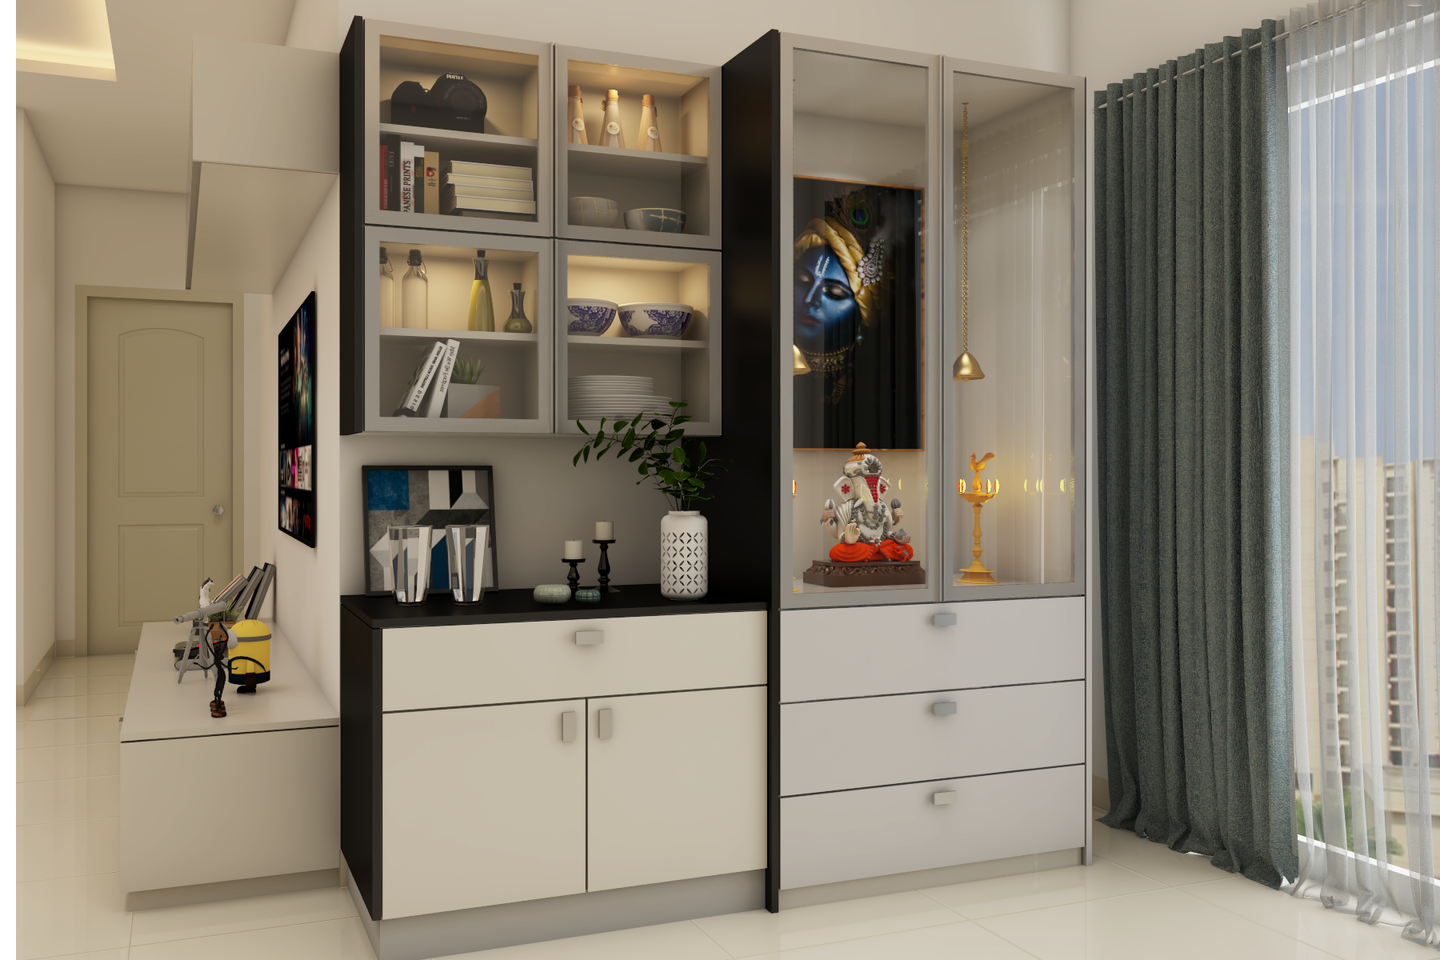 Modern Pooja Room Design With Glass Doors - Livspace